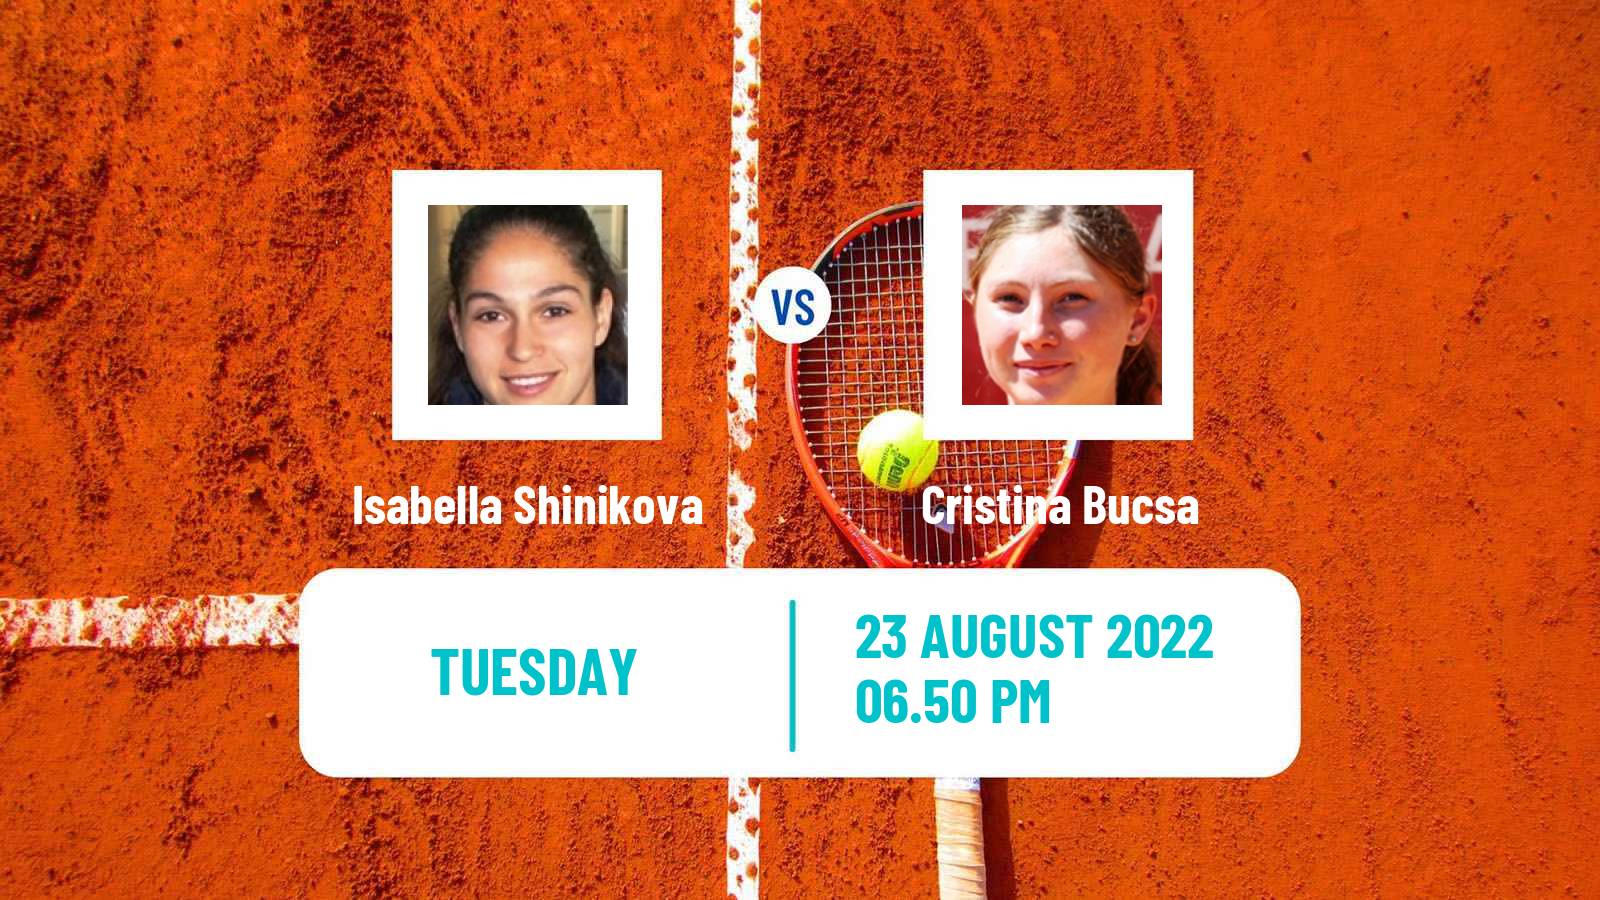 Tennis WTA US Open Isabella Shinikova - Cristina Bucsa